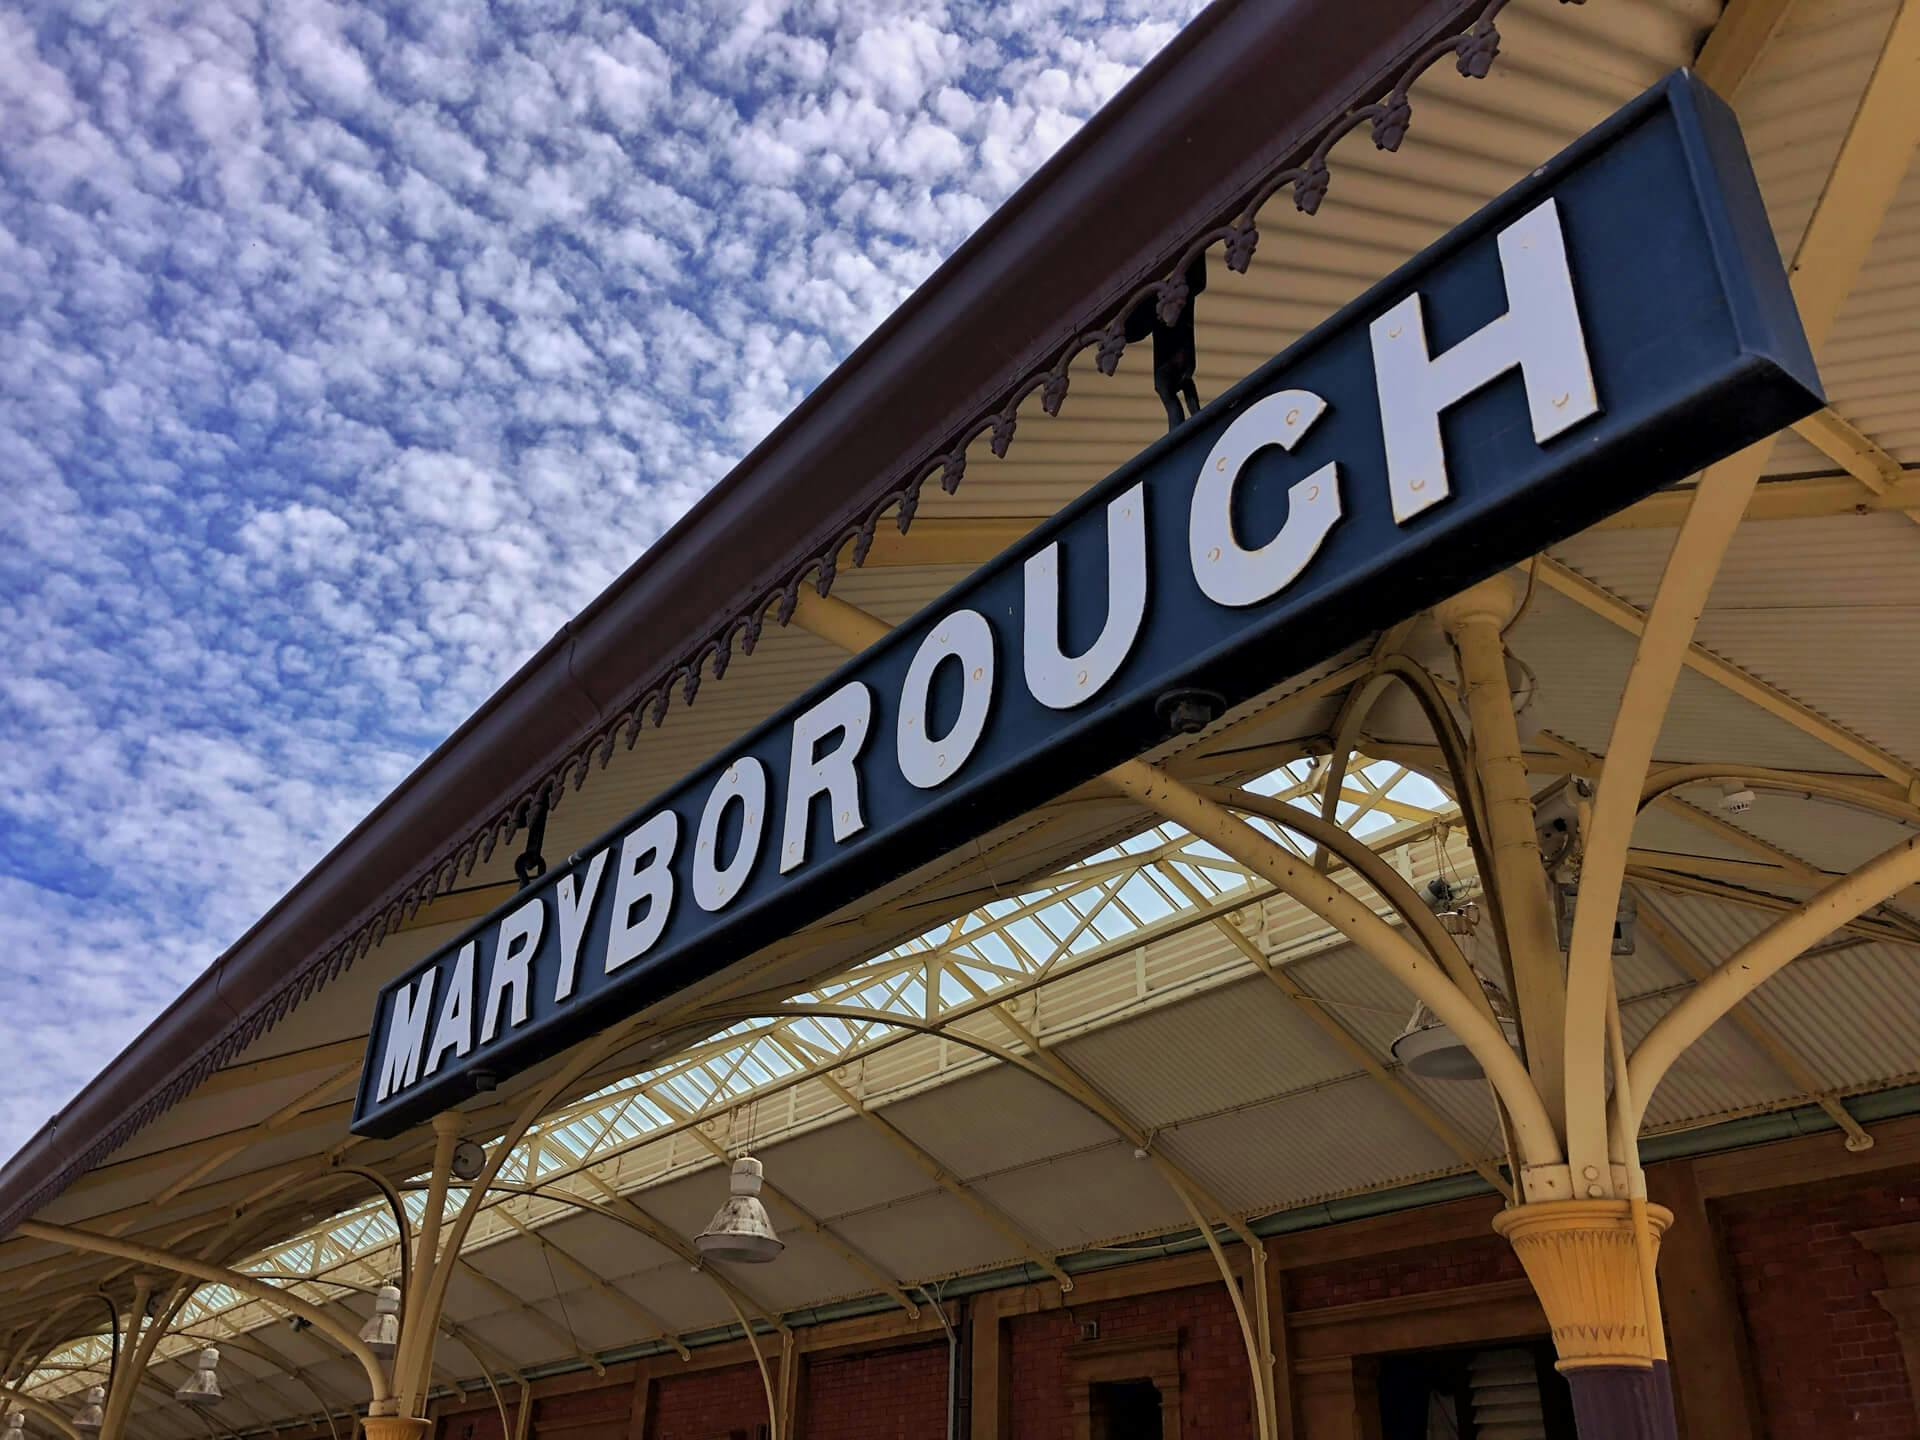 Exterior of Maryborough Railway Station